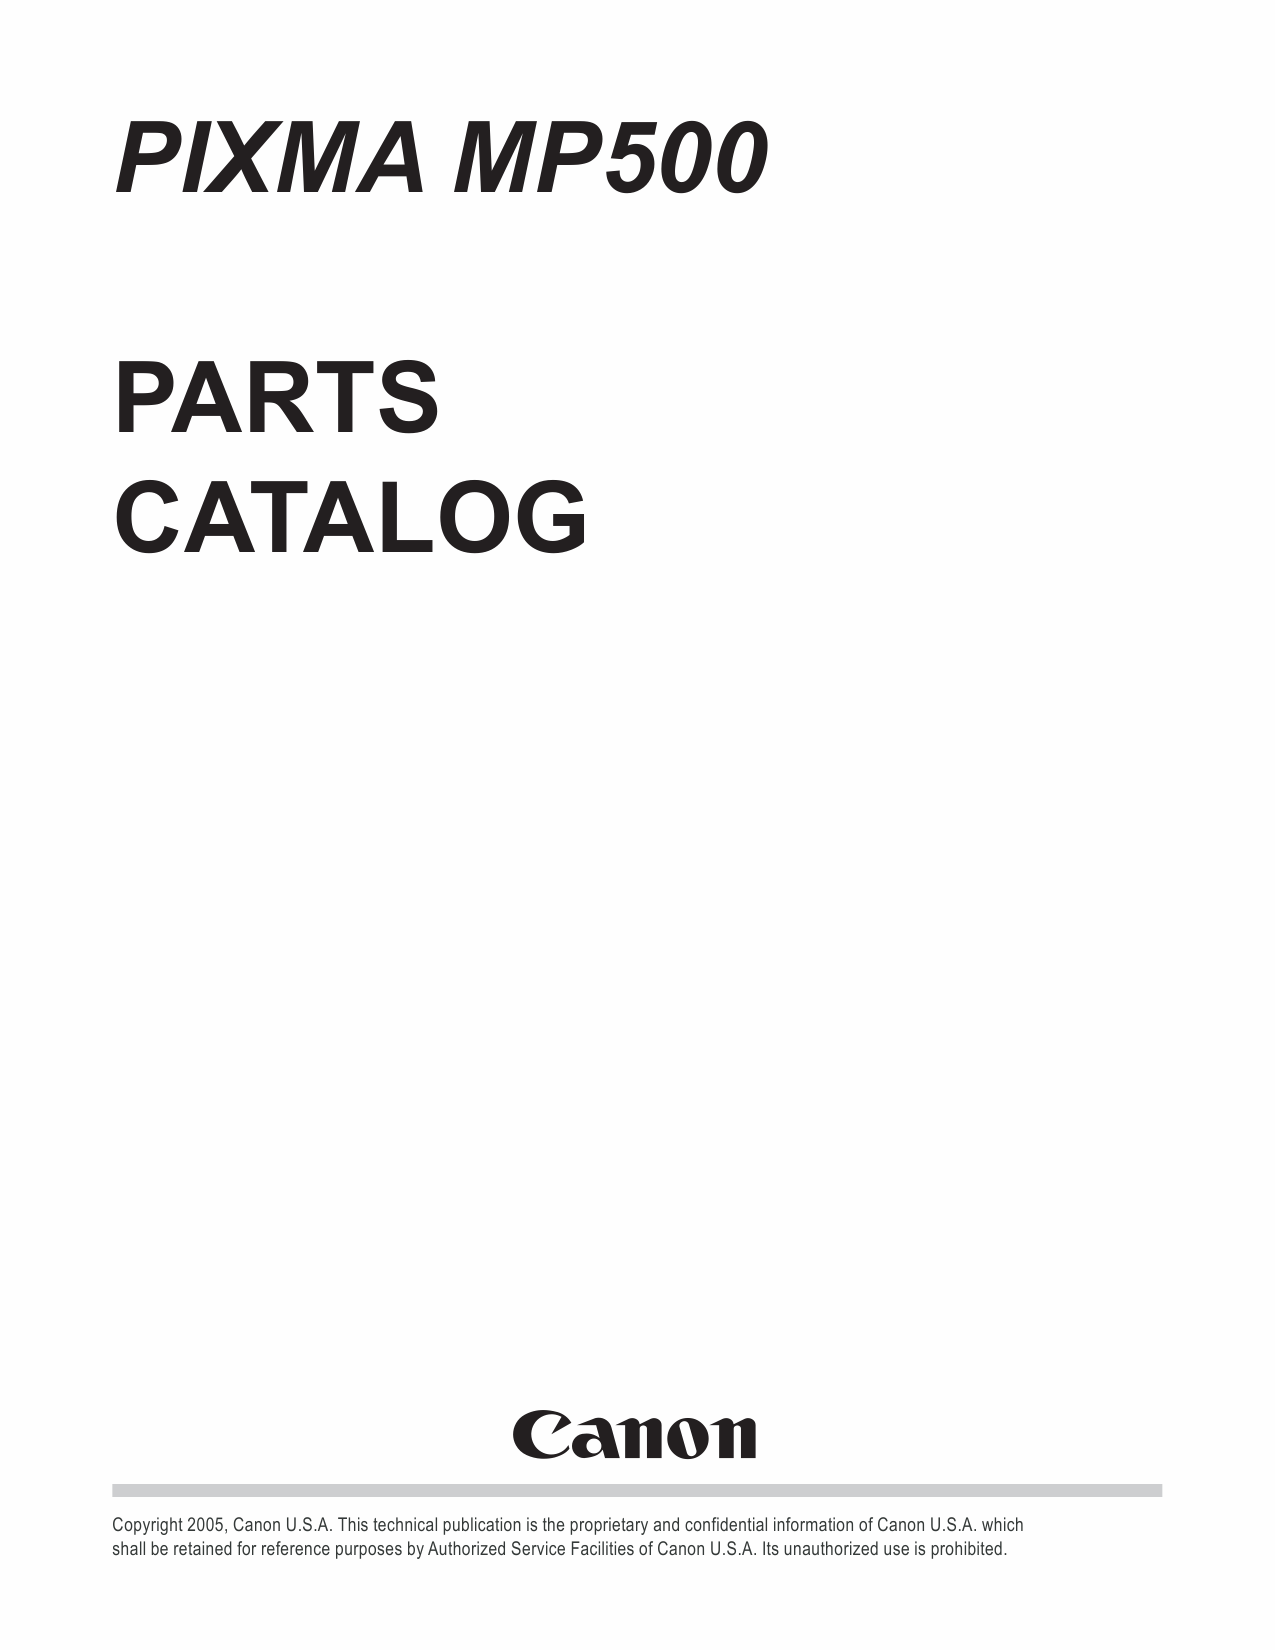 Canon PIXMA MP500 Parts Catalog Manual-1